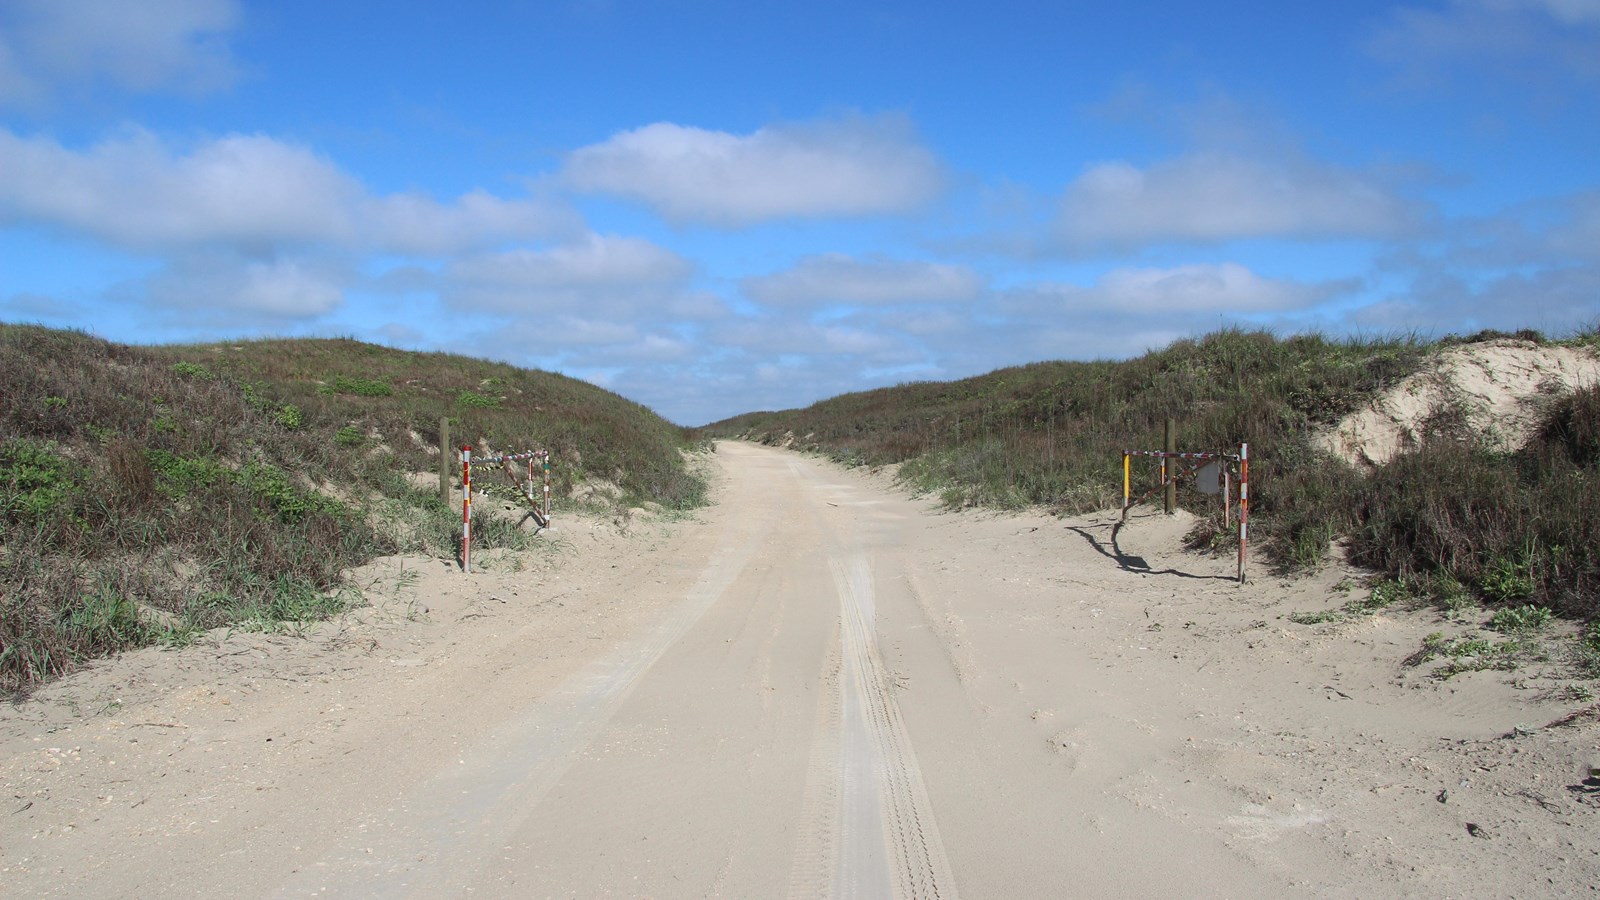 A dirt road cuts through the sand dunes.